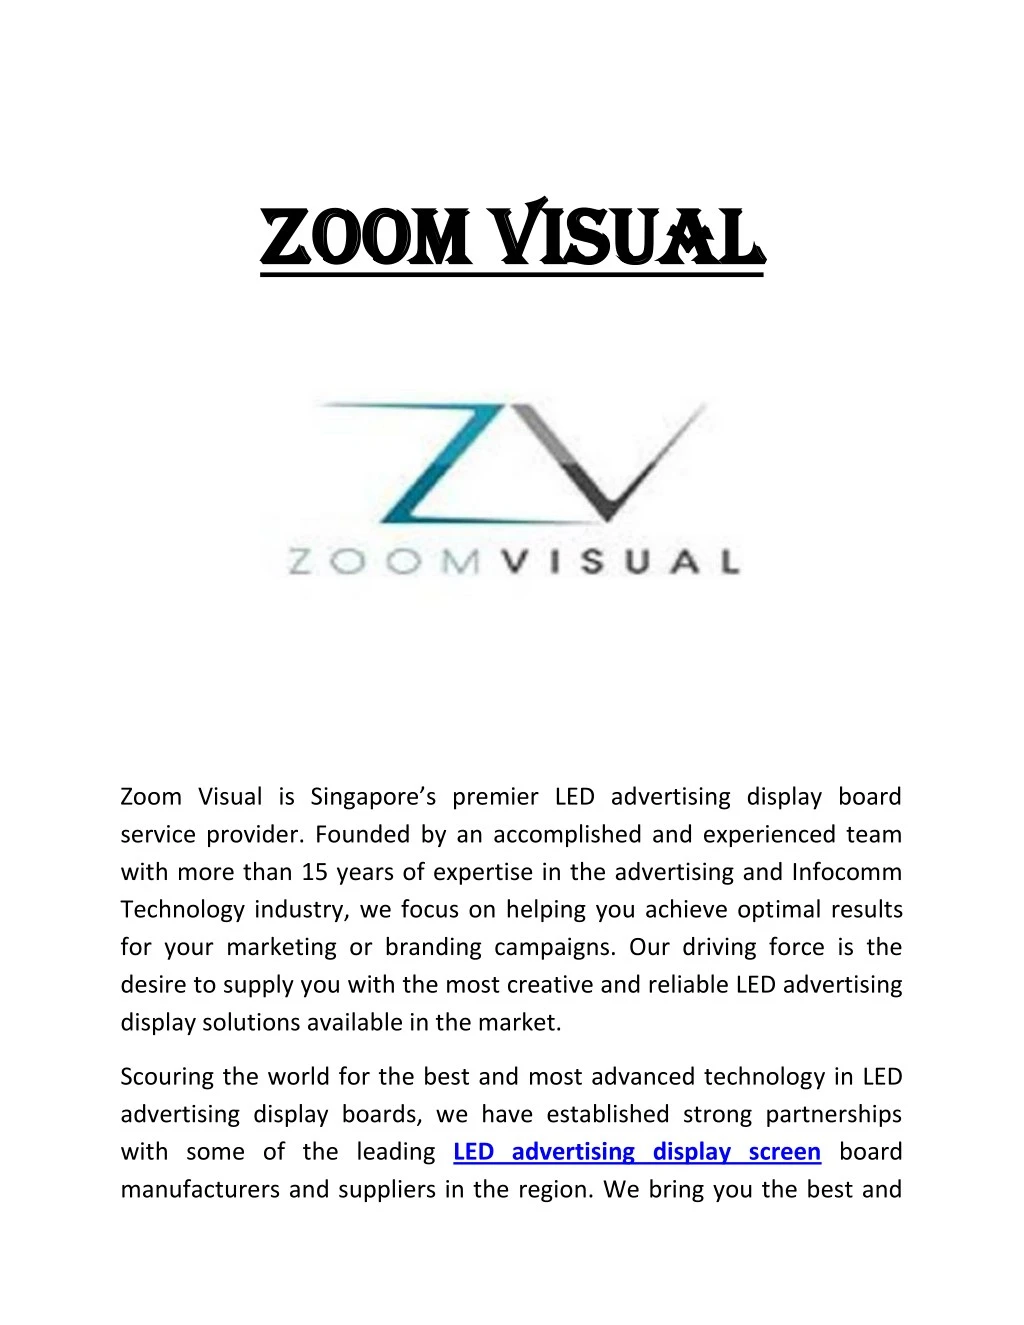 zoom visual zoom visual